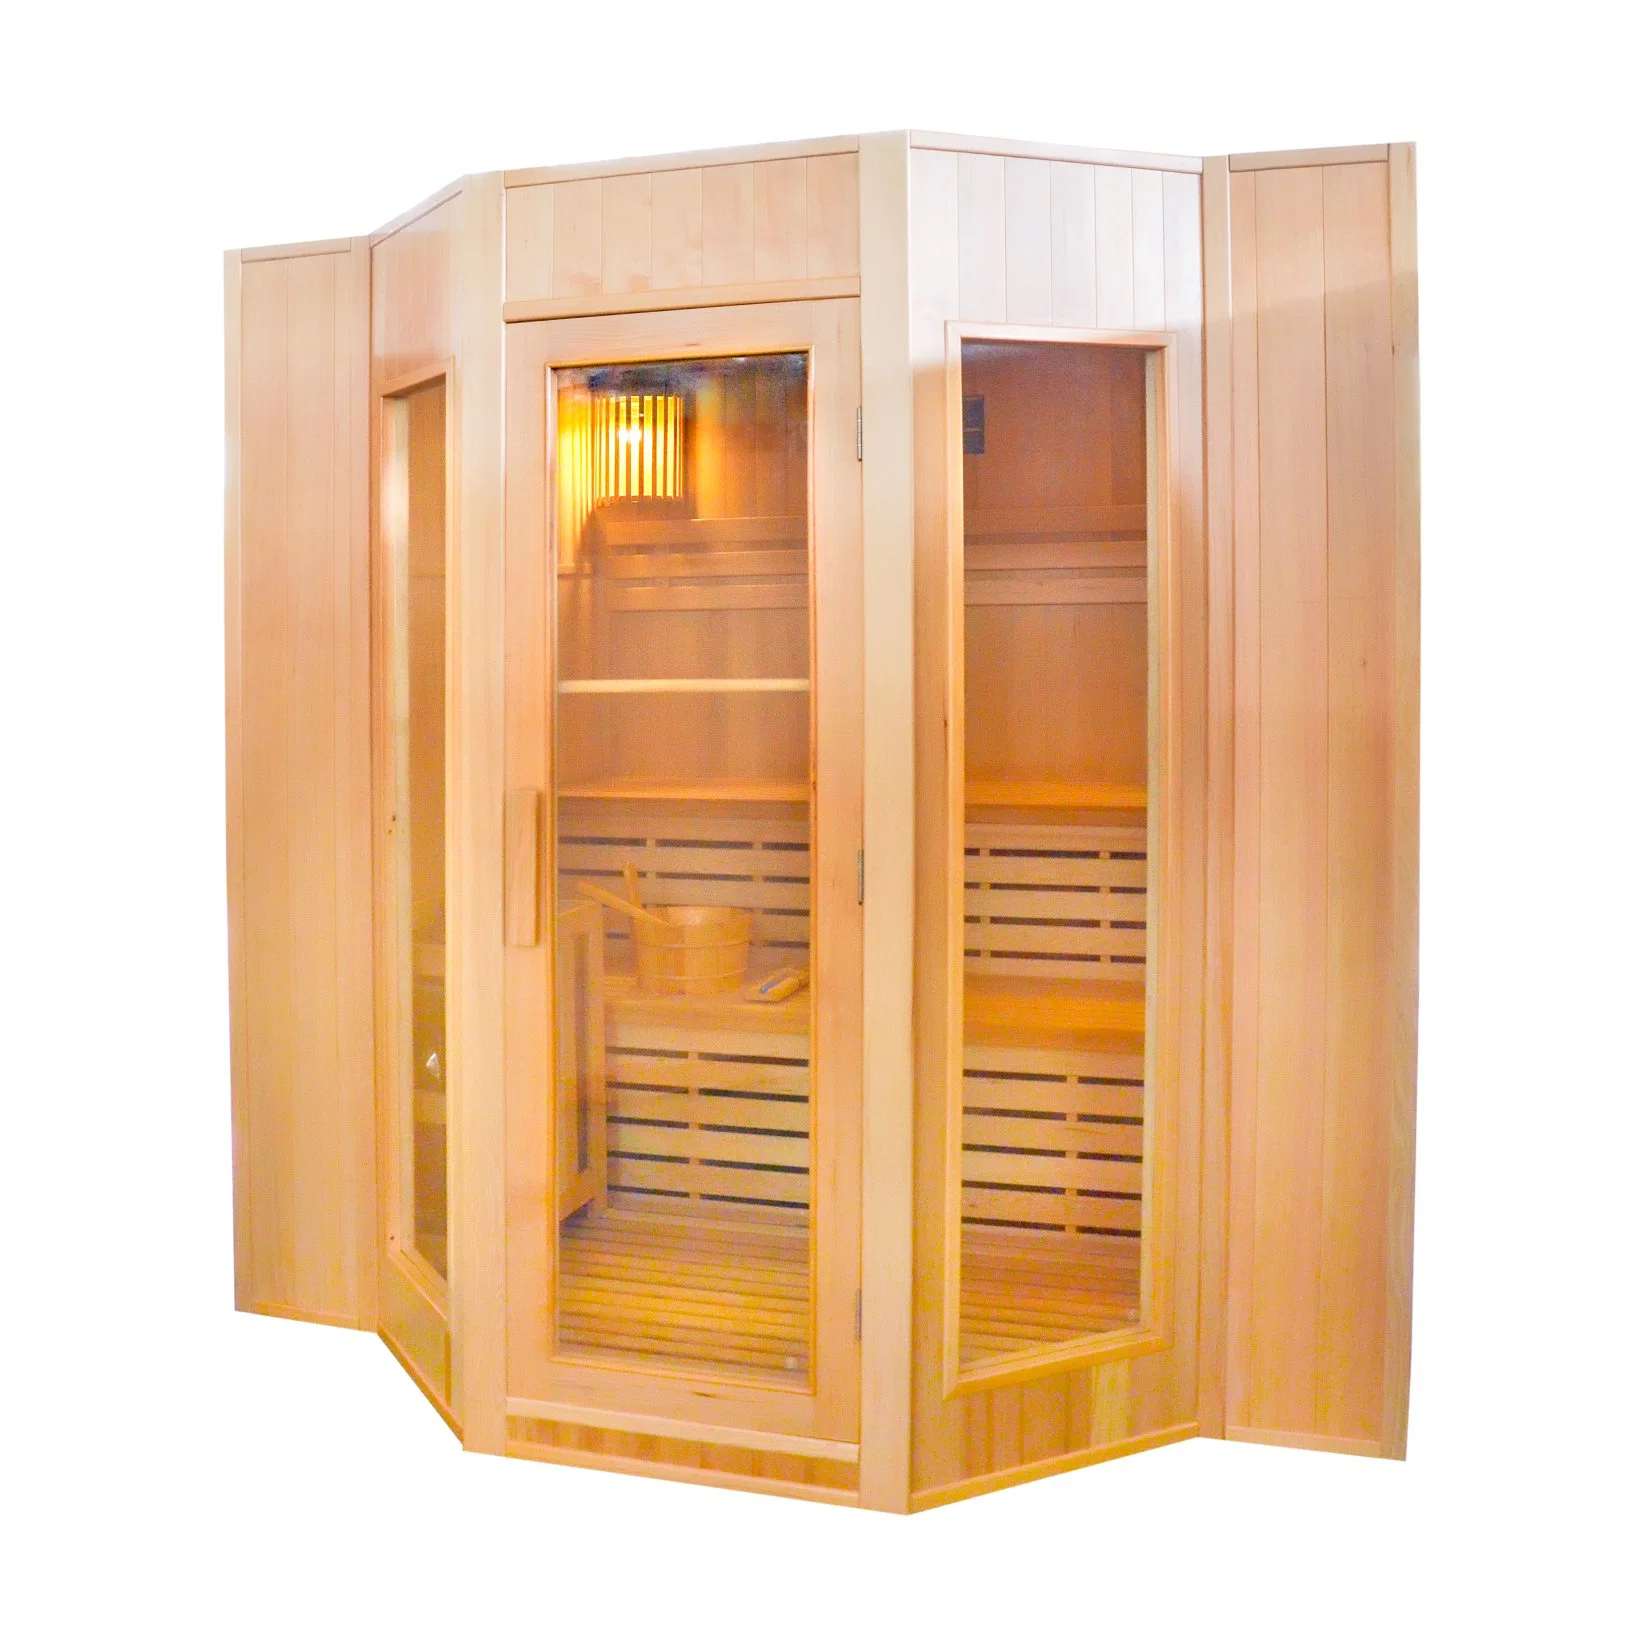 Joda Wholesale Home Sauna Steam Shower Enclosure Dry Steam Wood Sauna Room with Glass Frame Sauna